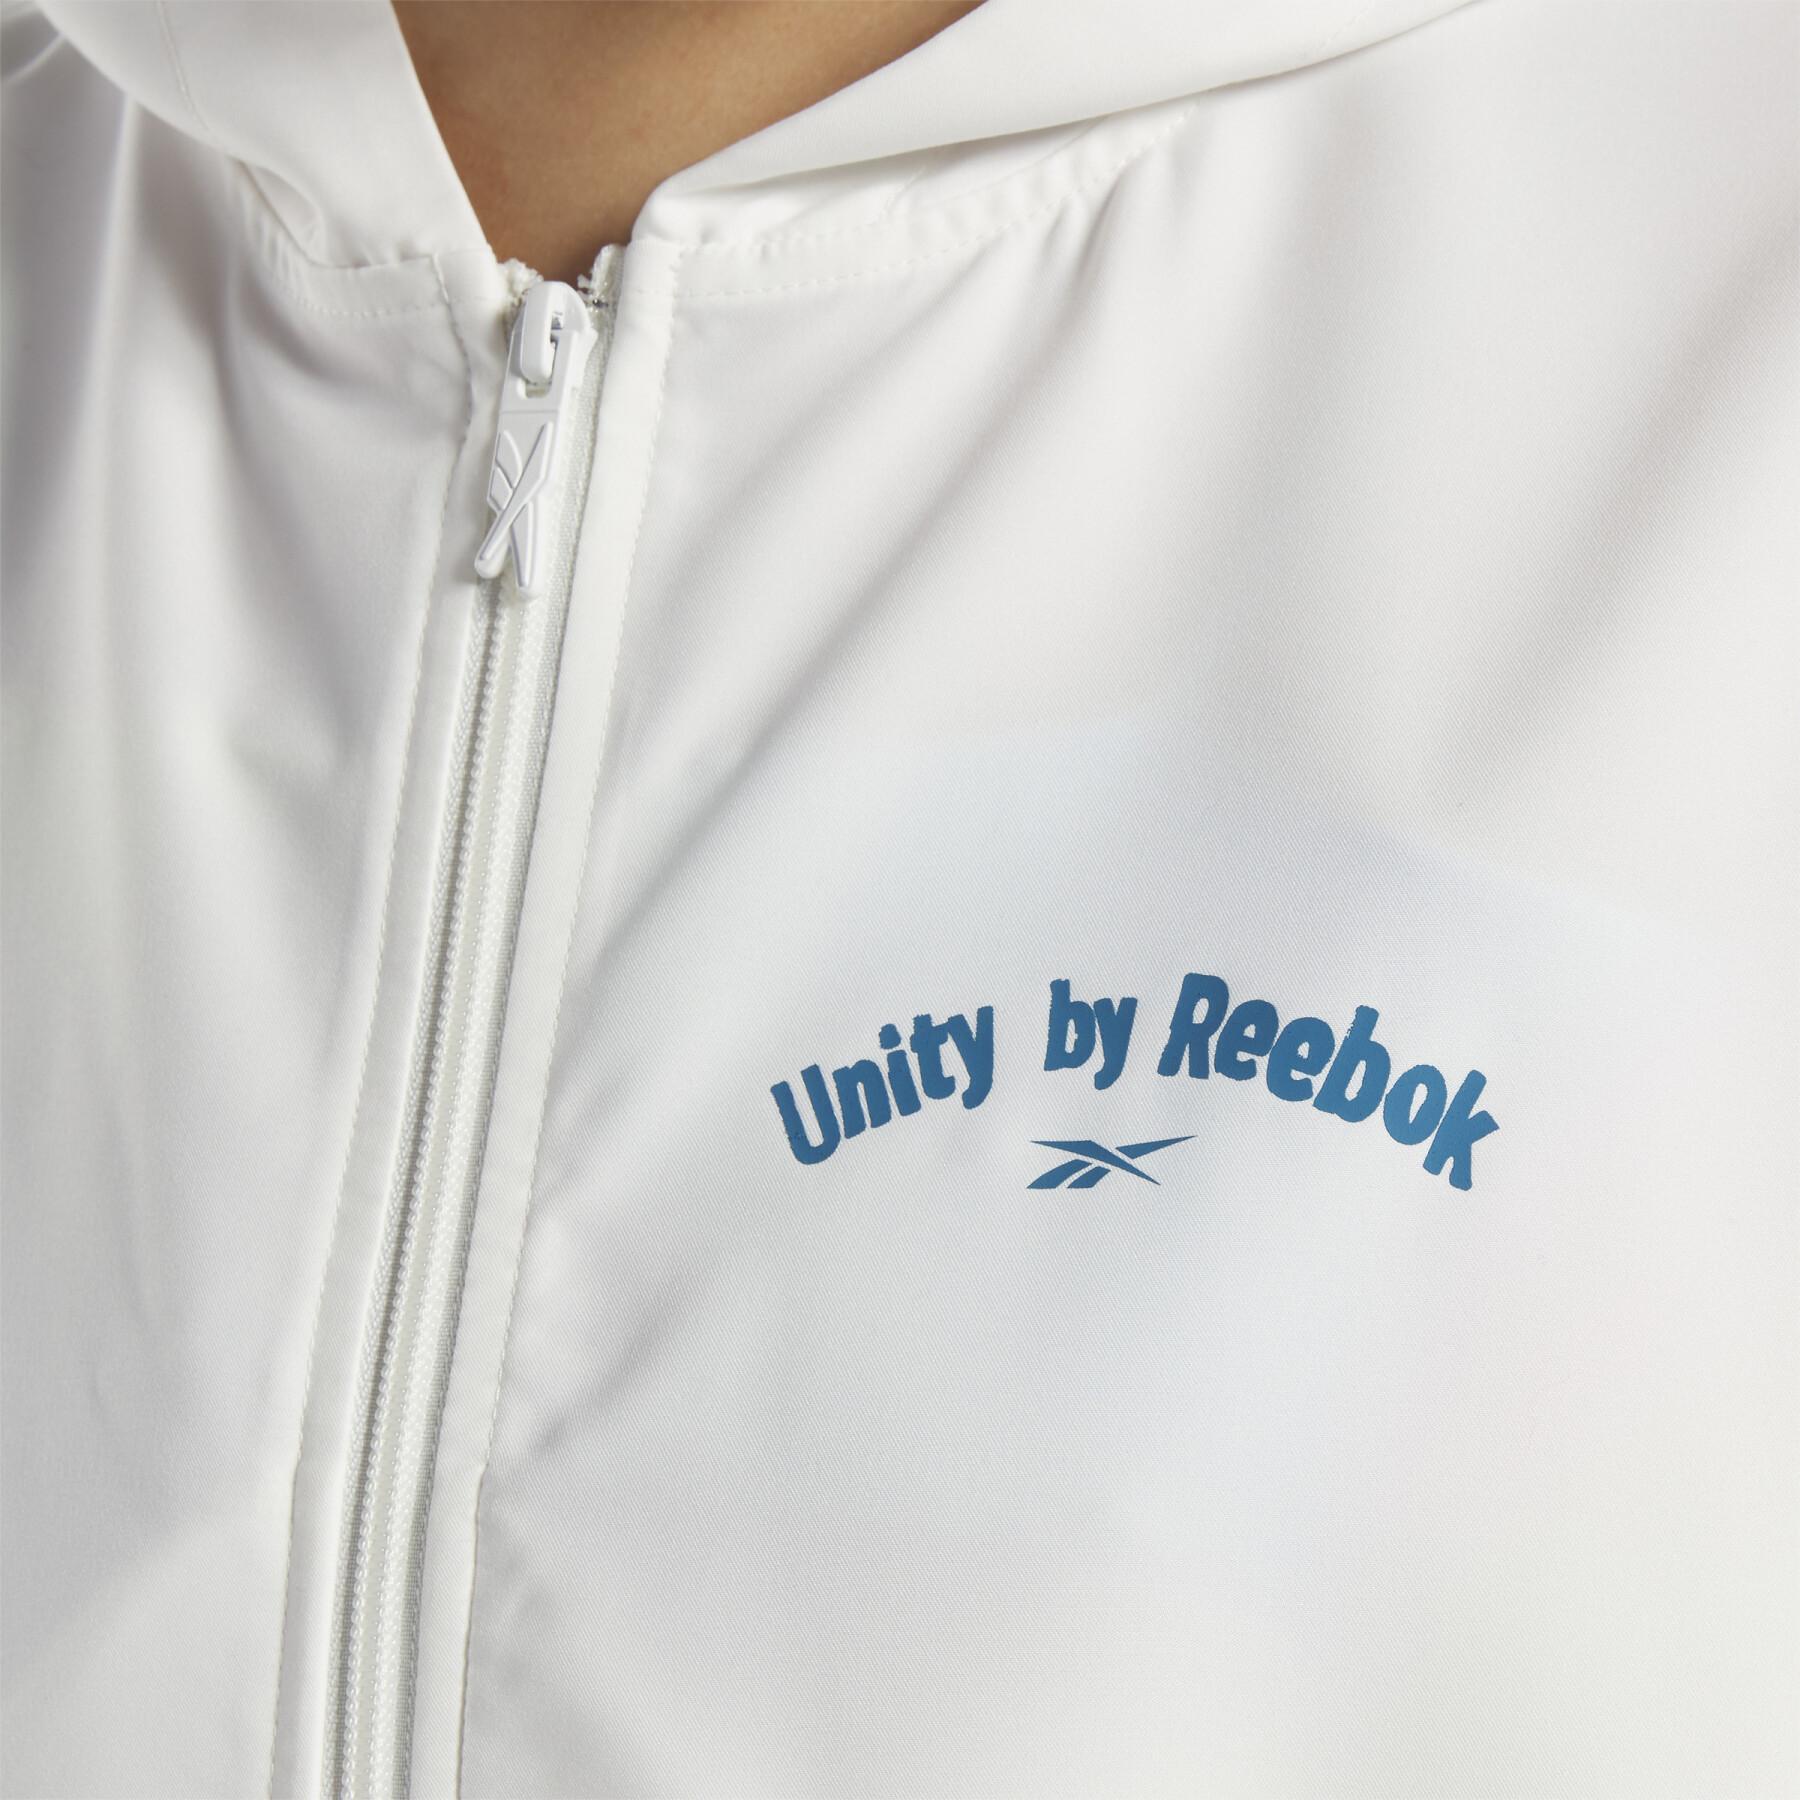 Waterproof jacket Reebok Unity